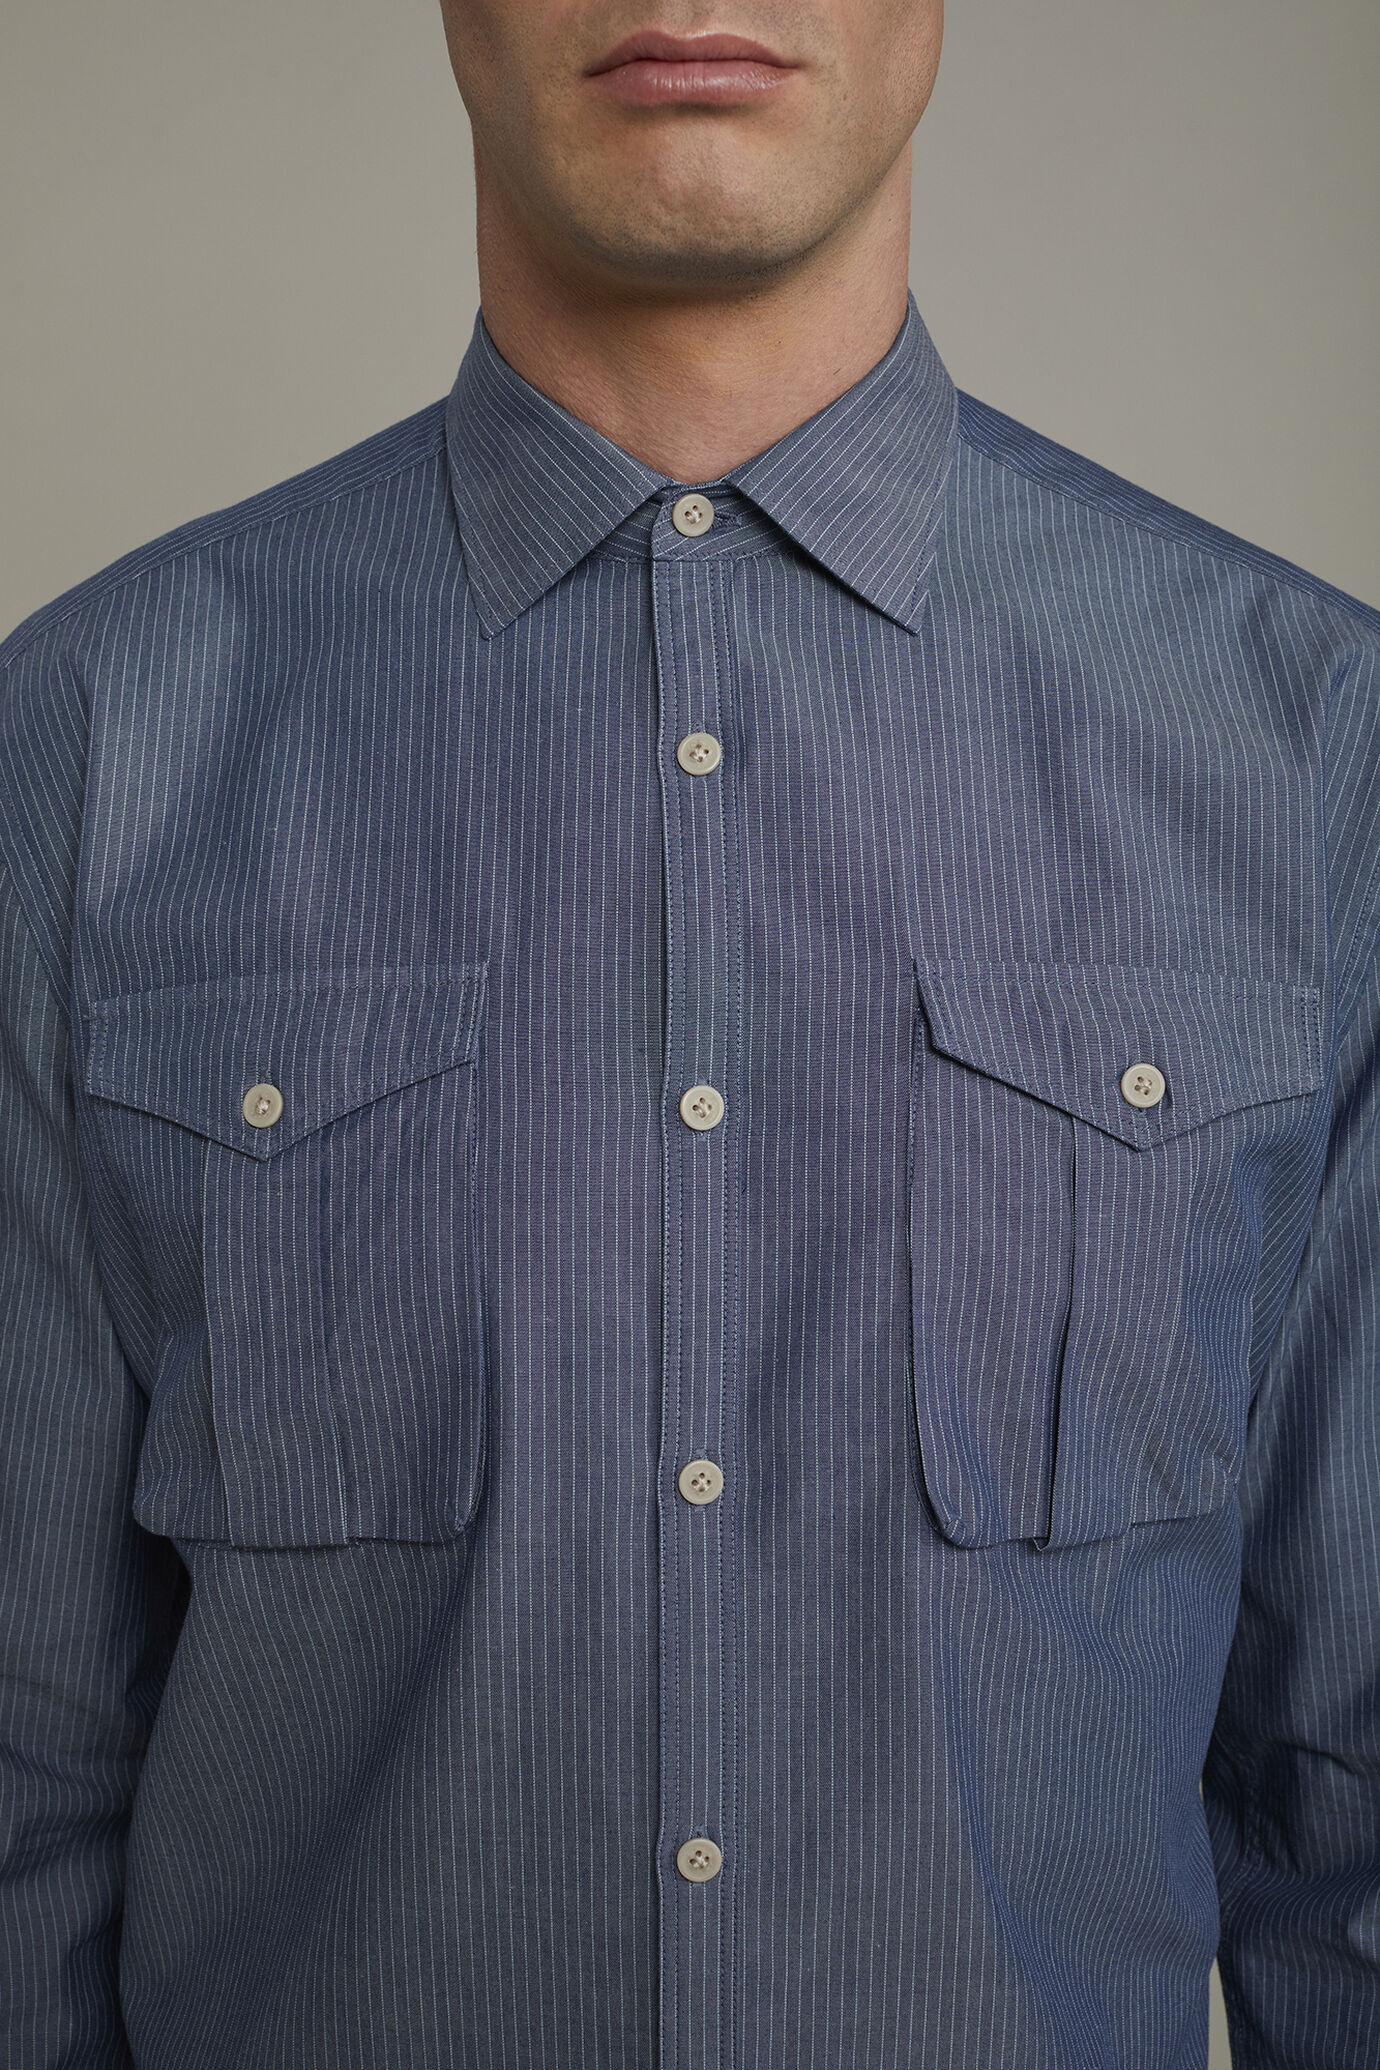 Camicia casual uomo collo classico 100% cotone tessuto gessato in denim comfort fit image number 3